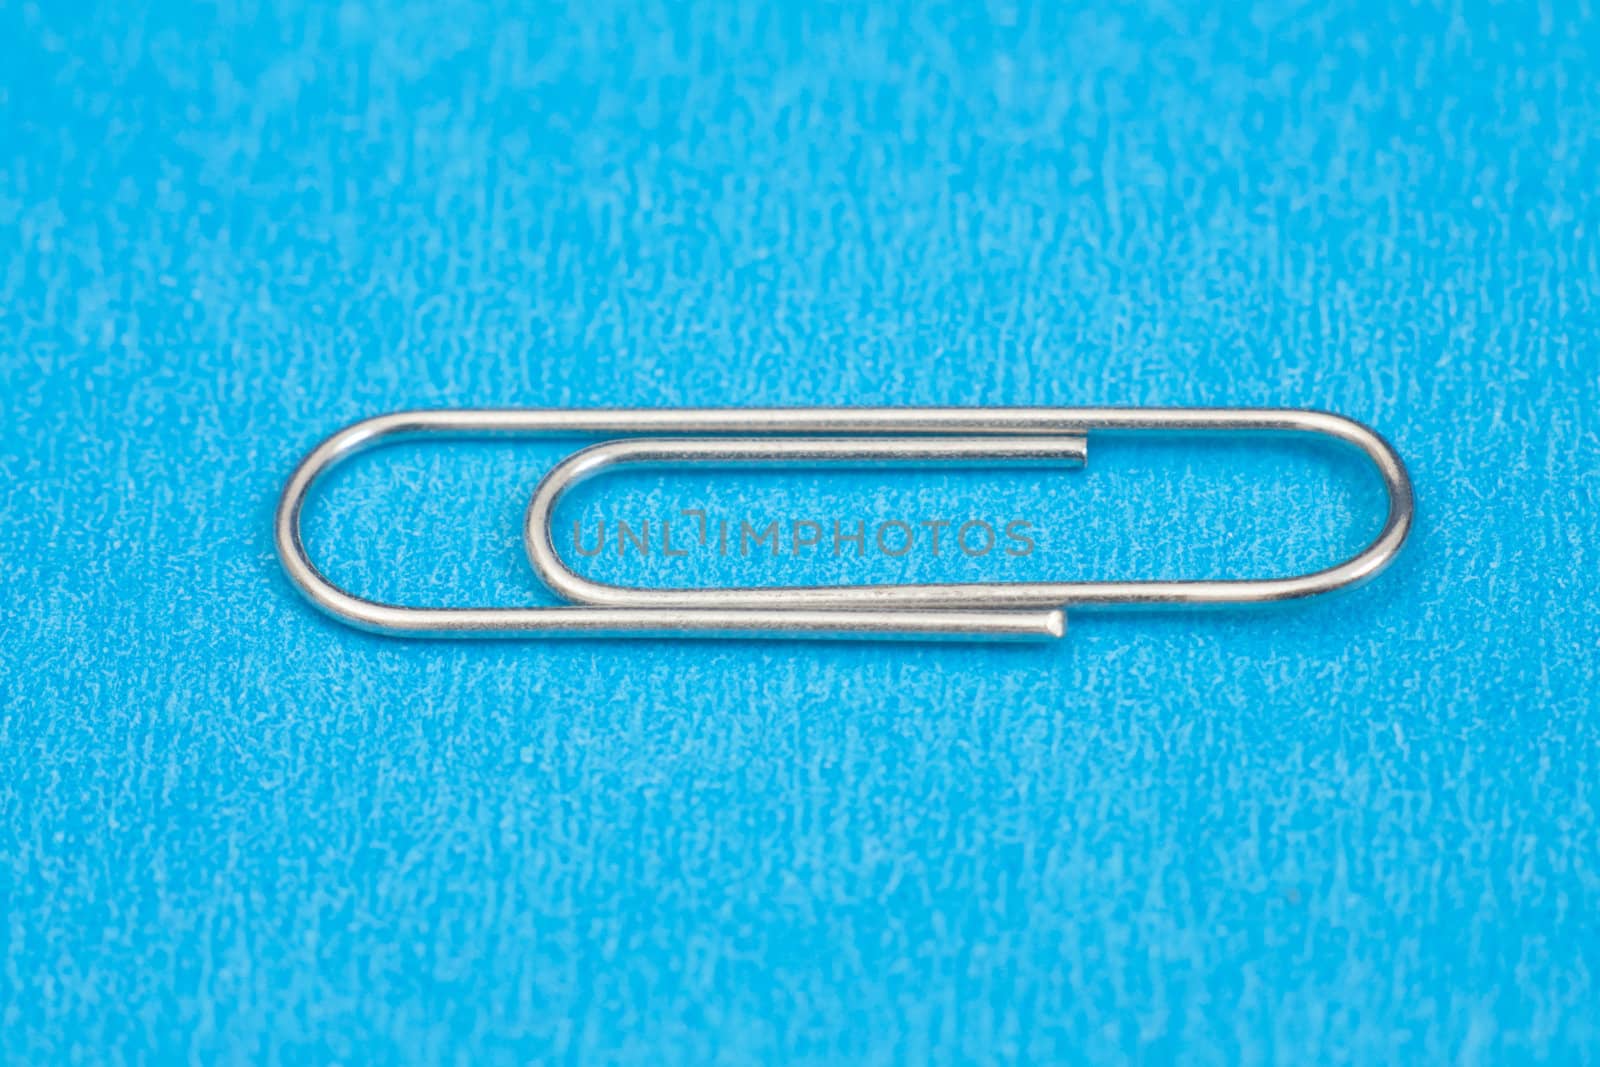 Silver paper clip by aleksan